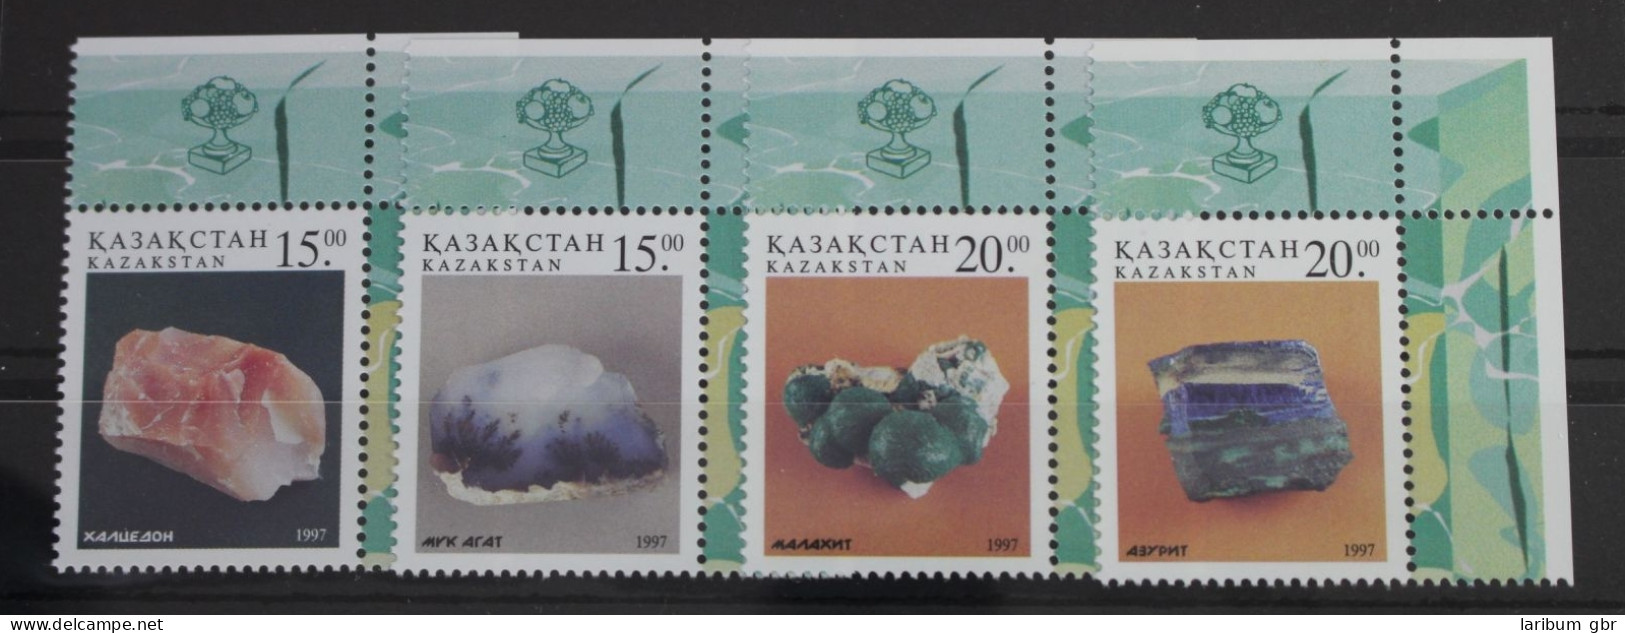 Kasachstan 188-191 Postfrisch #WT453 - Kazakistan